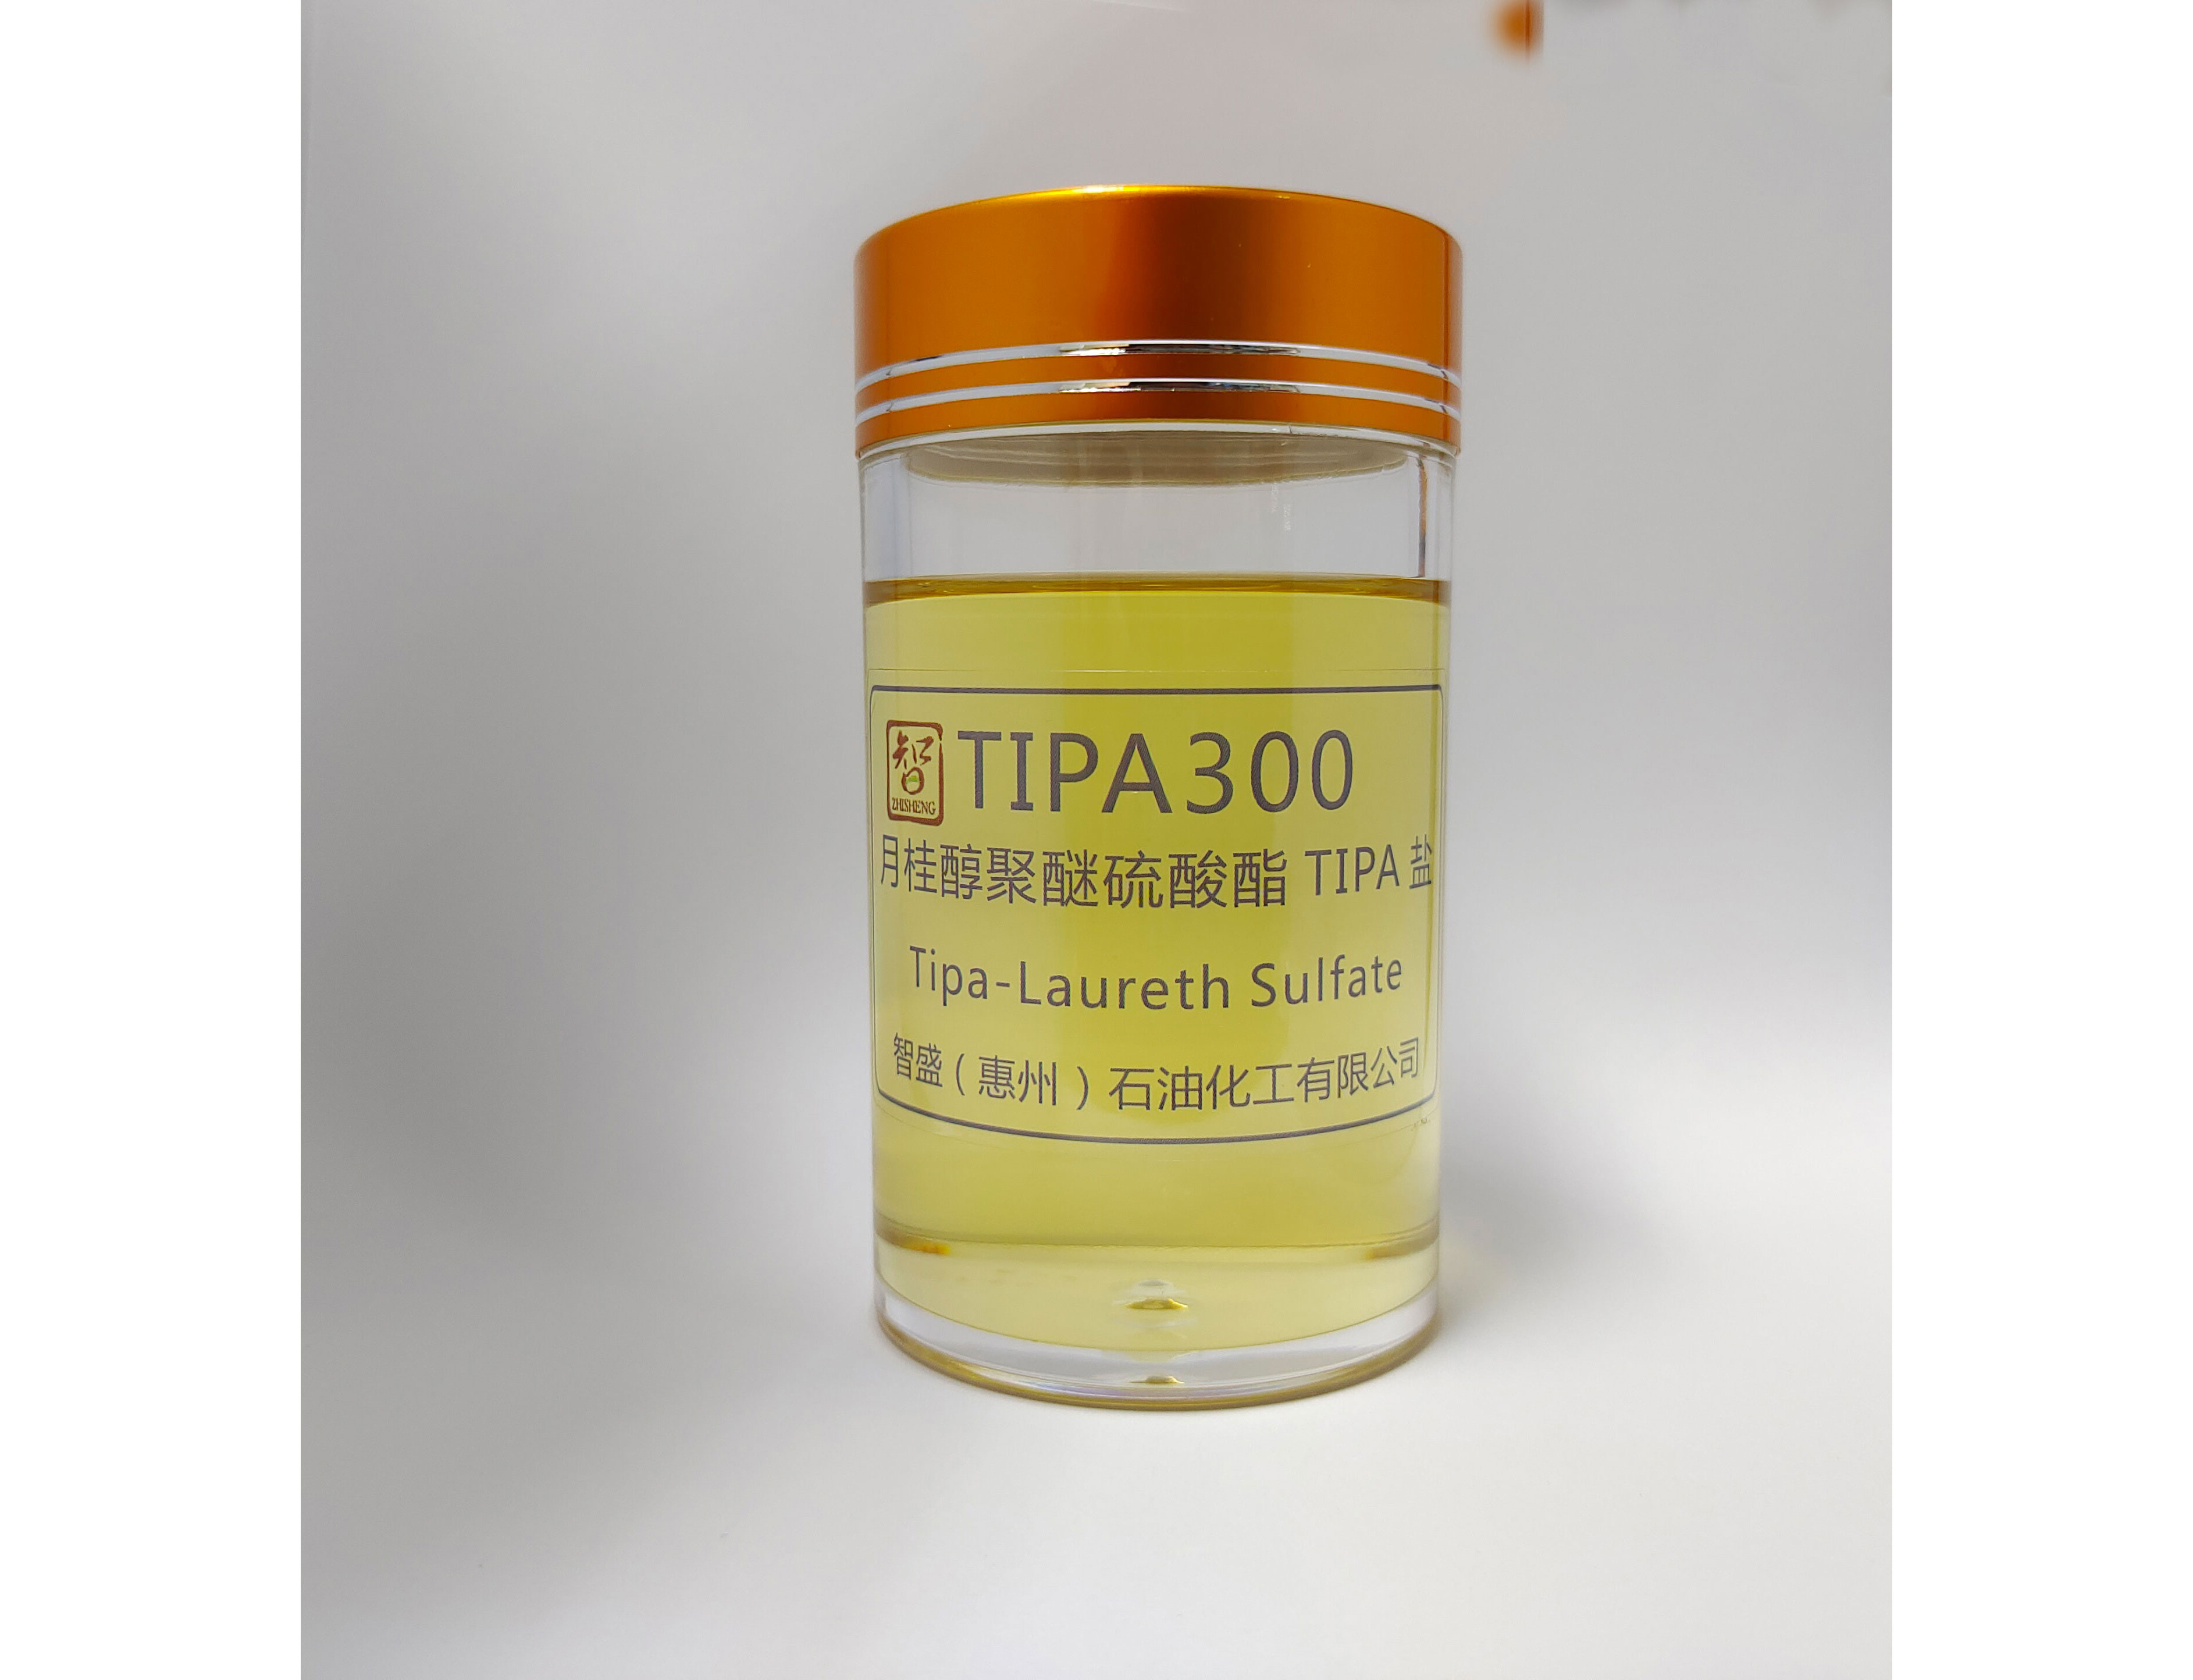  j  月桂醇聚醚硫酸酯 TIPA盐（TIPA 300）